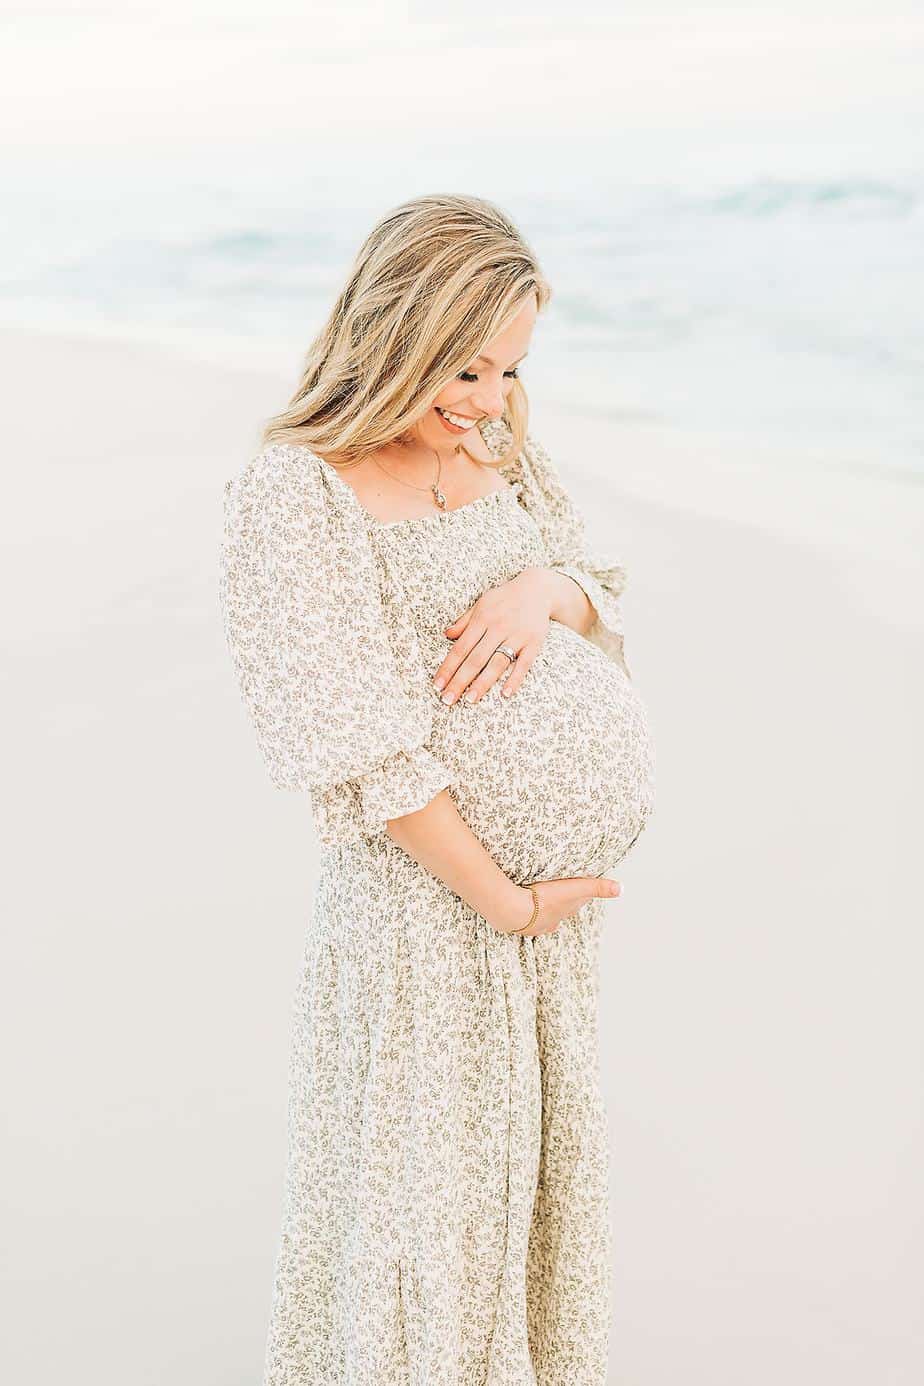 beautiful pregnant woman awaiting her newborn baby at the beach